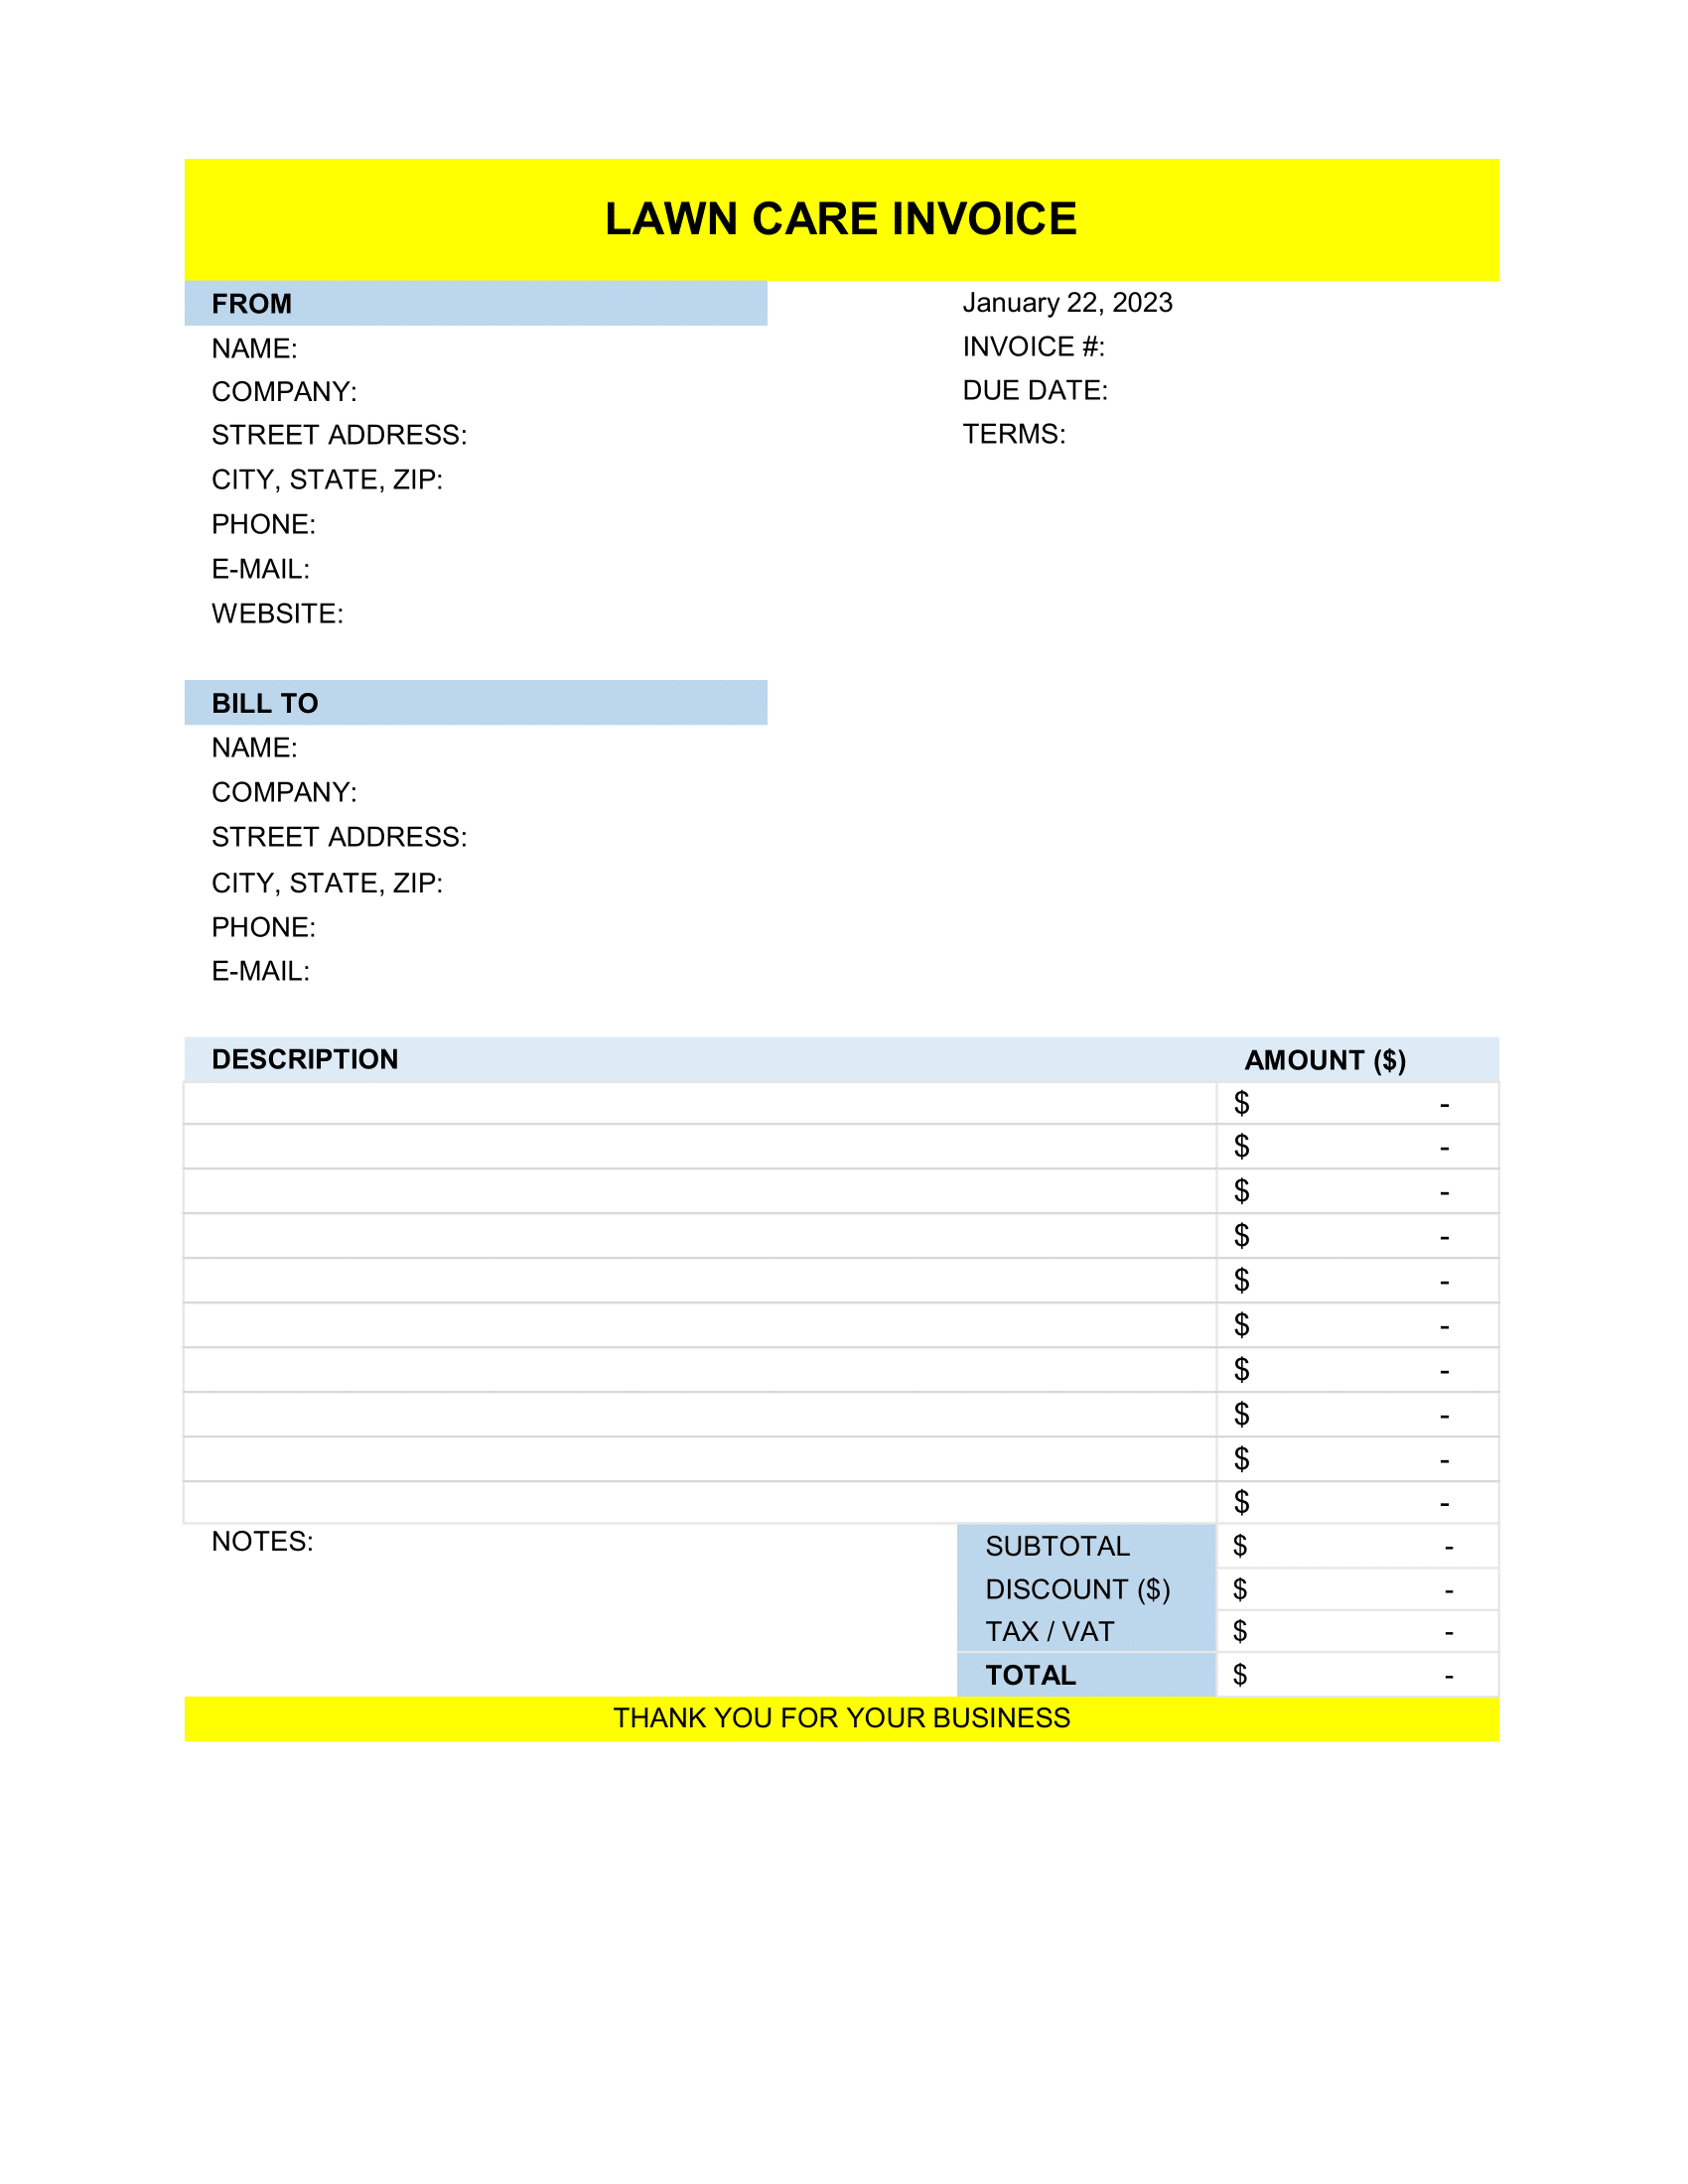 Lawn Care Invoice Format